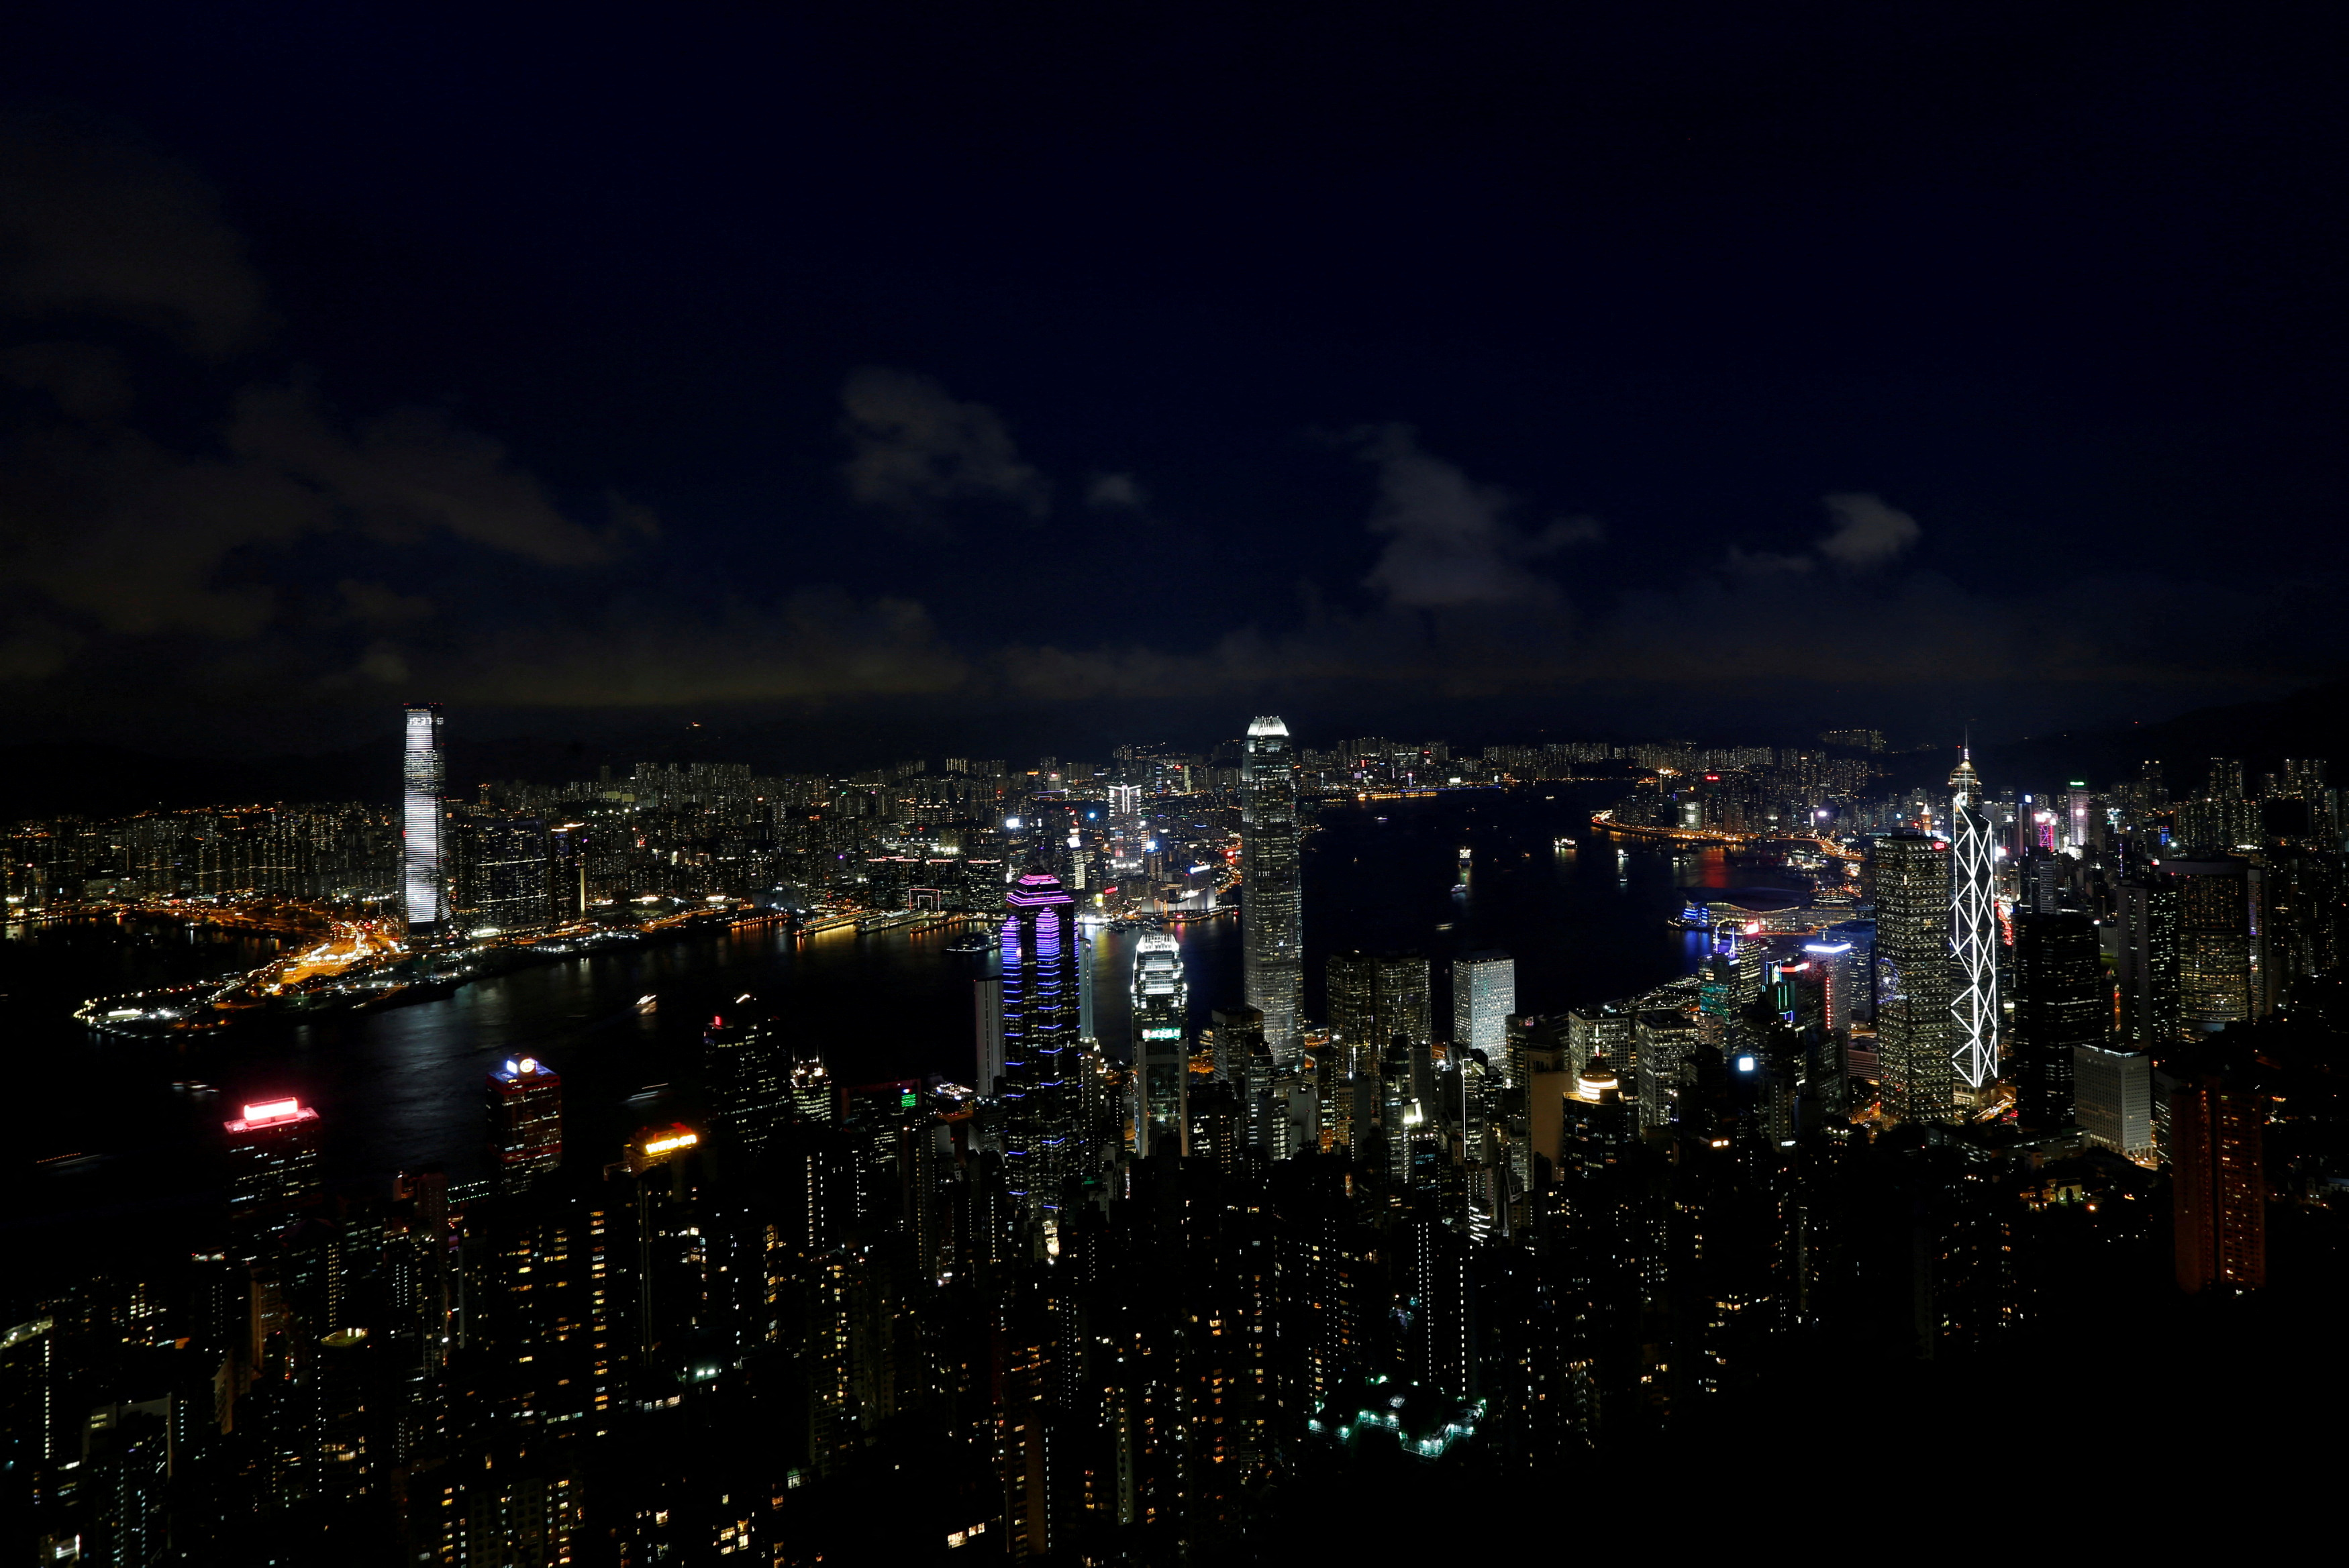 Lights light up the skyline of Hong Kong in the evening